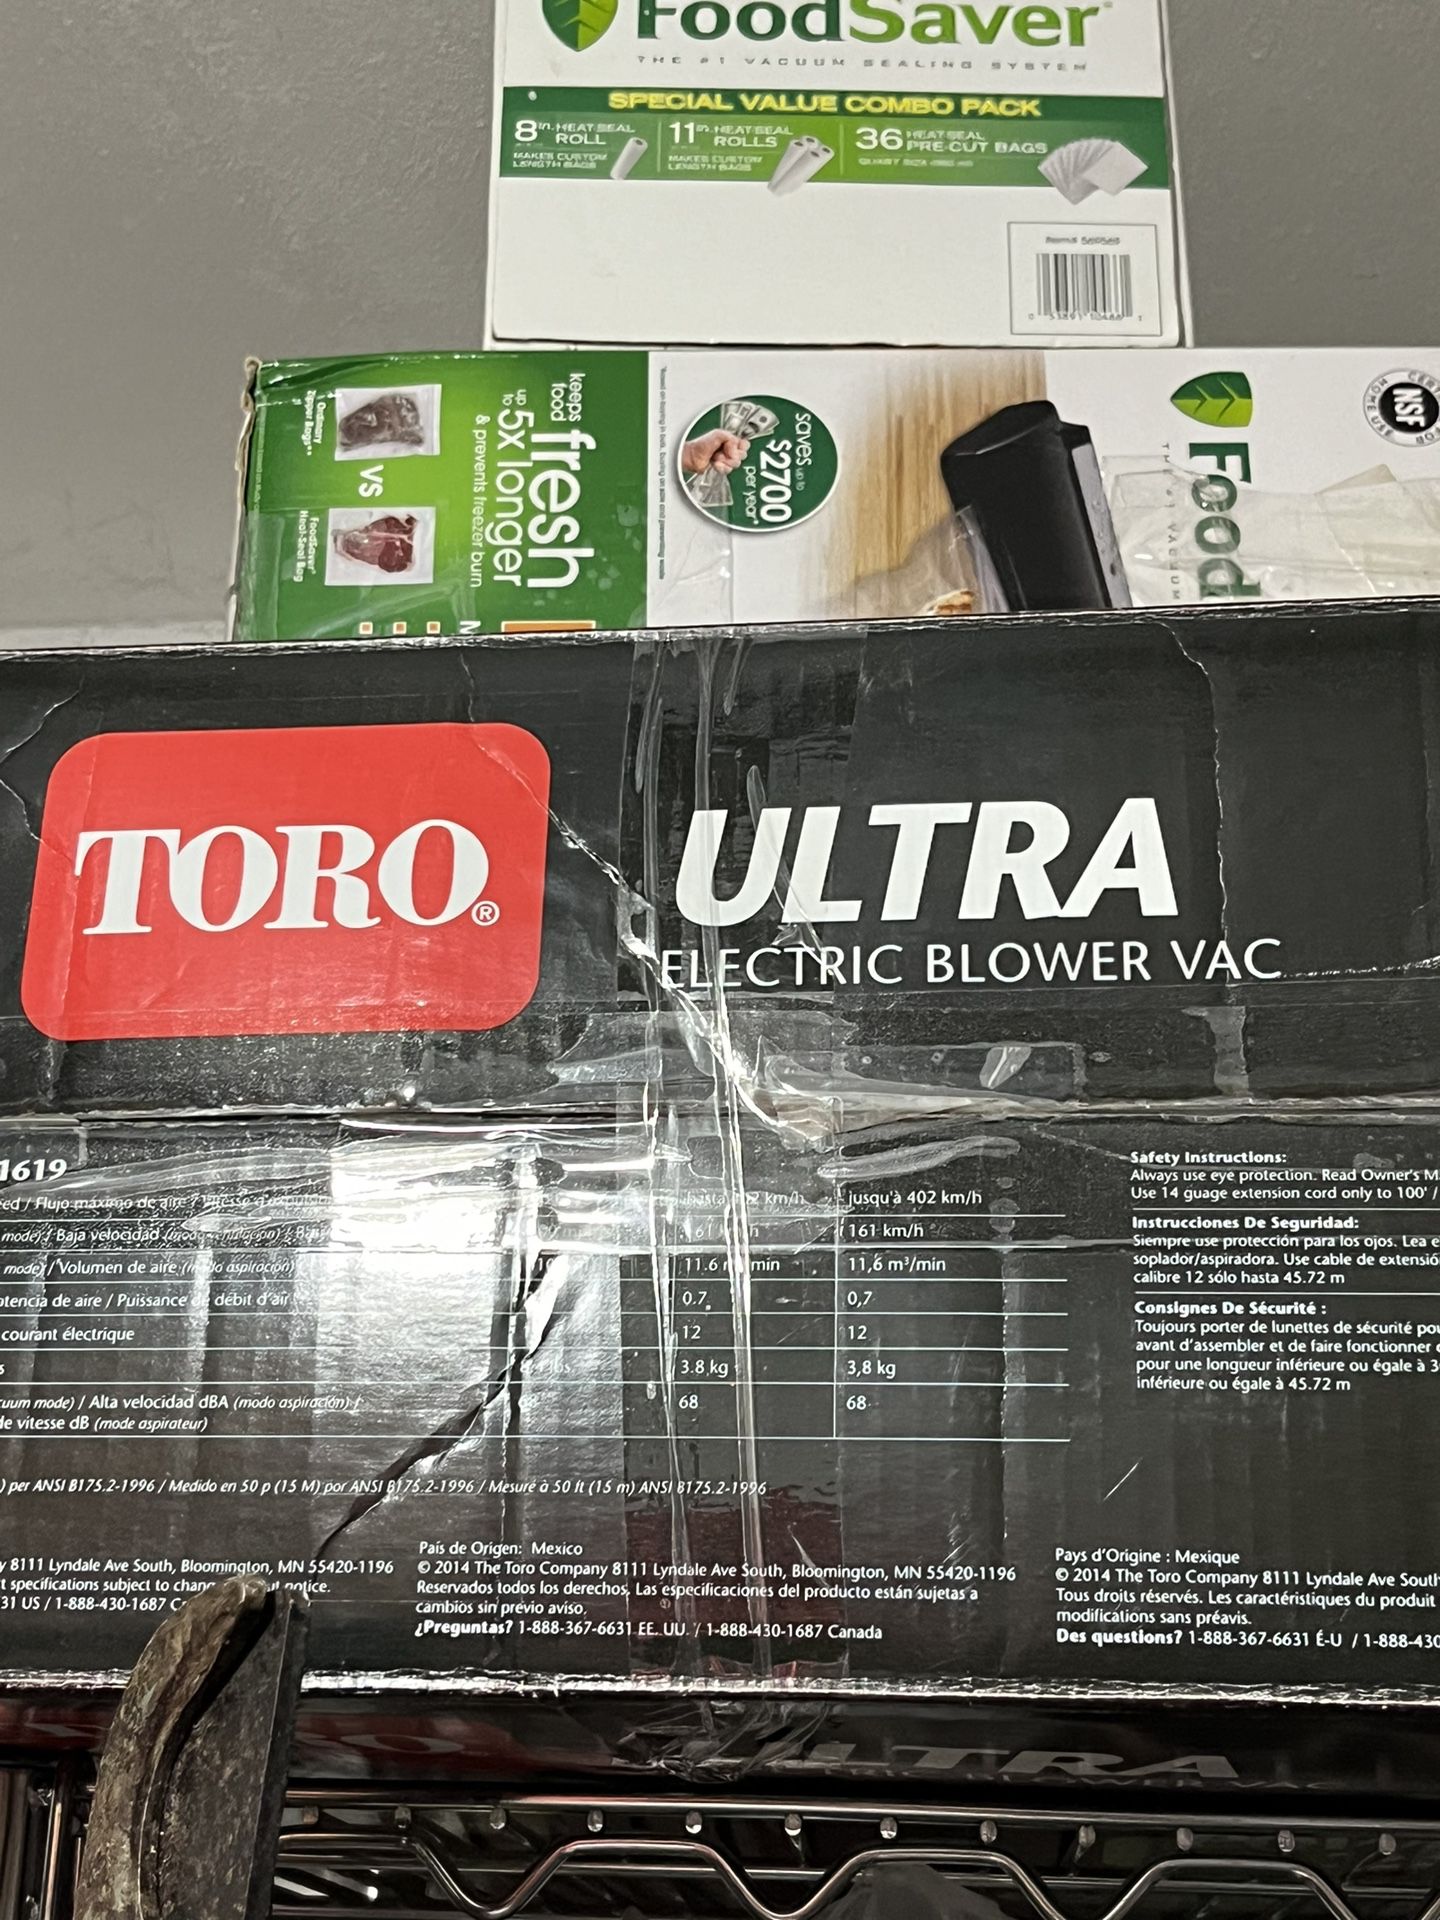 Toro Utra Electric Blower/Vac